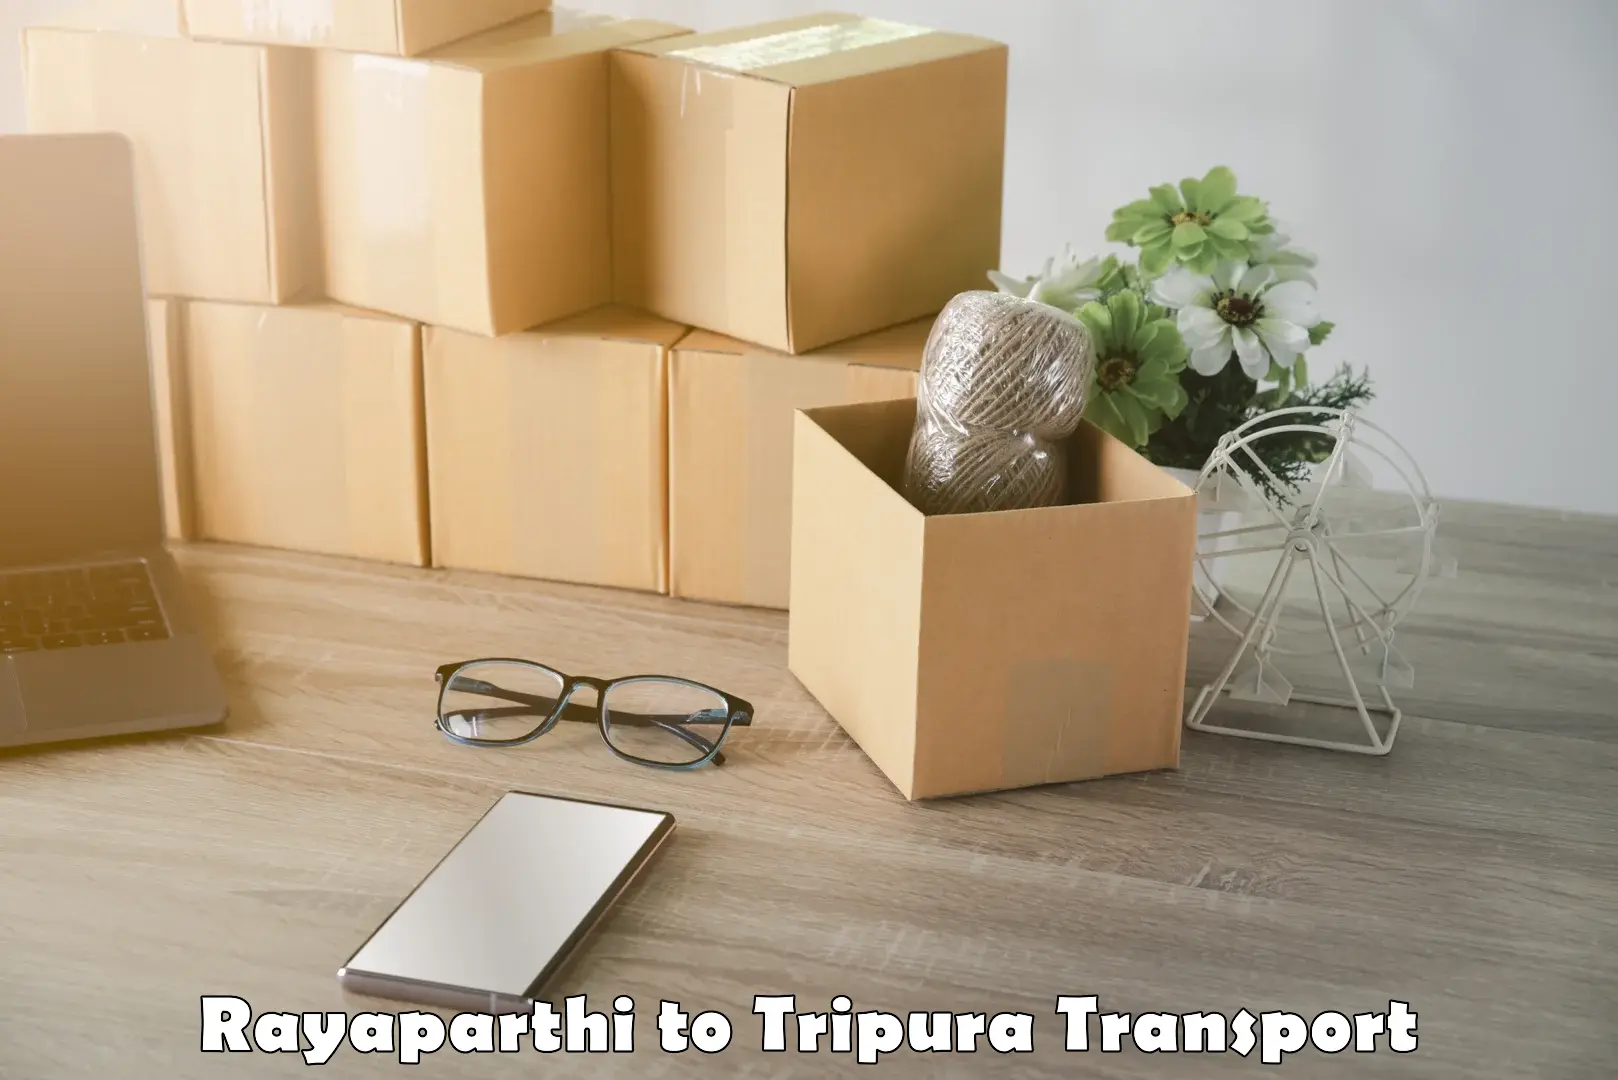 Daily transport service Rayaparthi to Udaipur Tripura